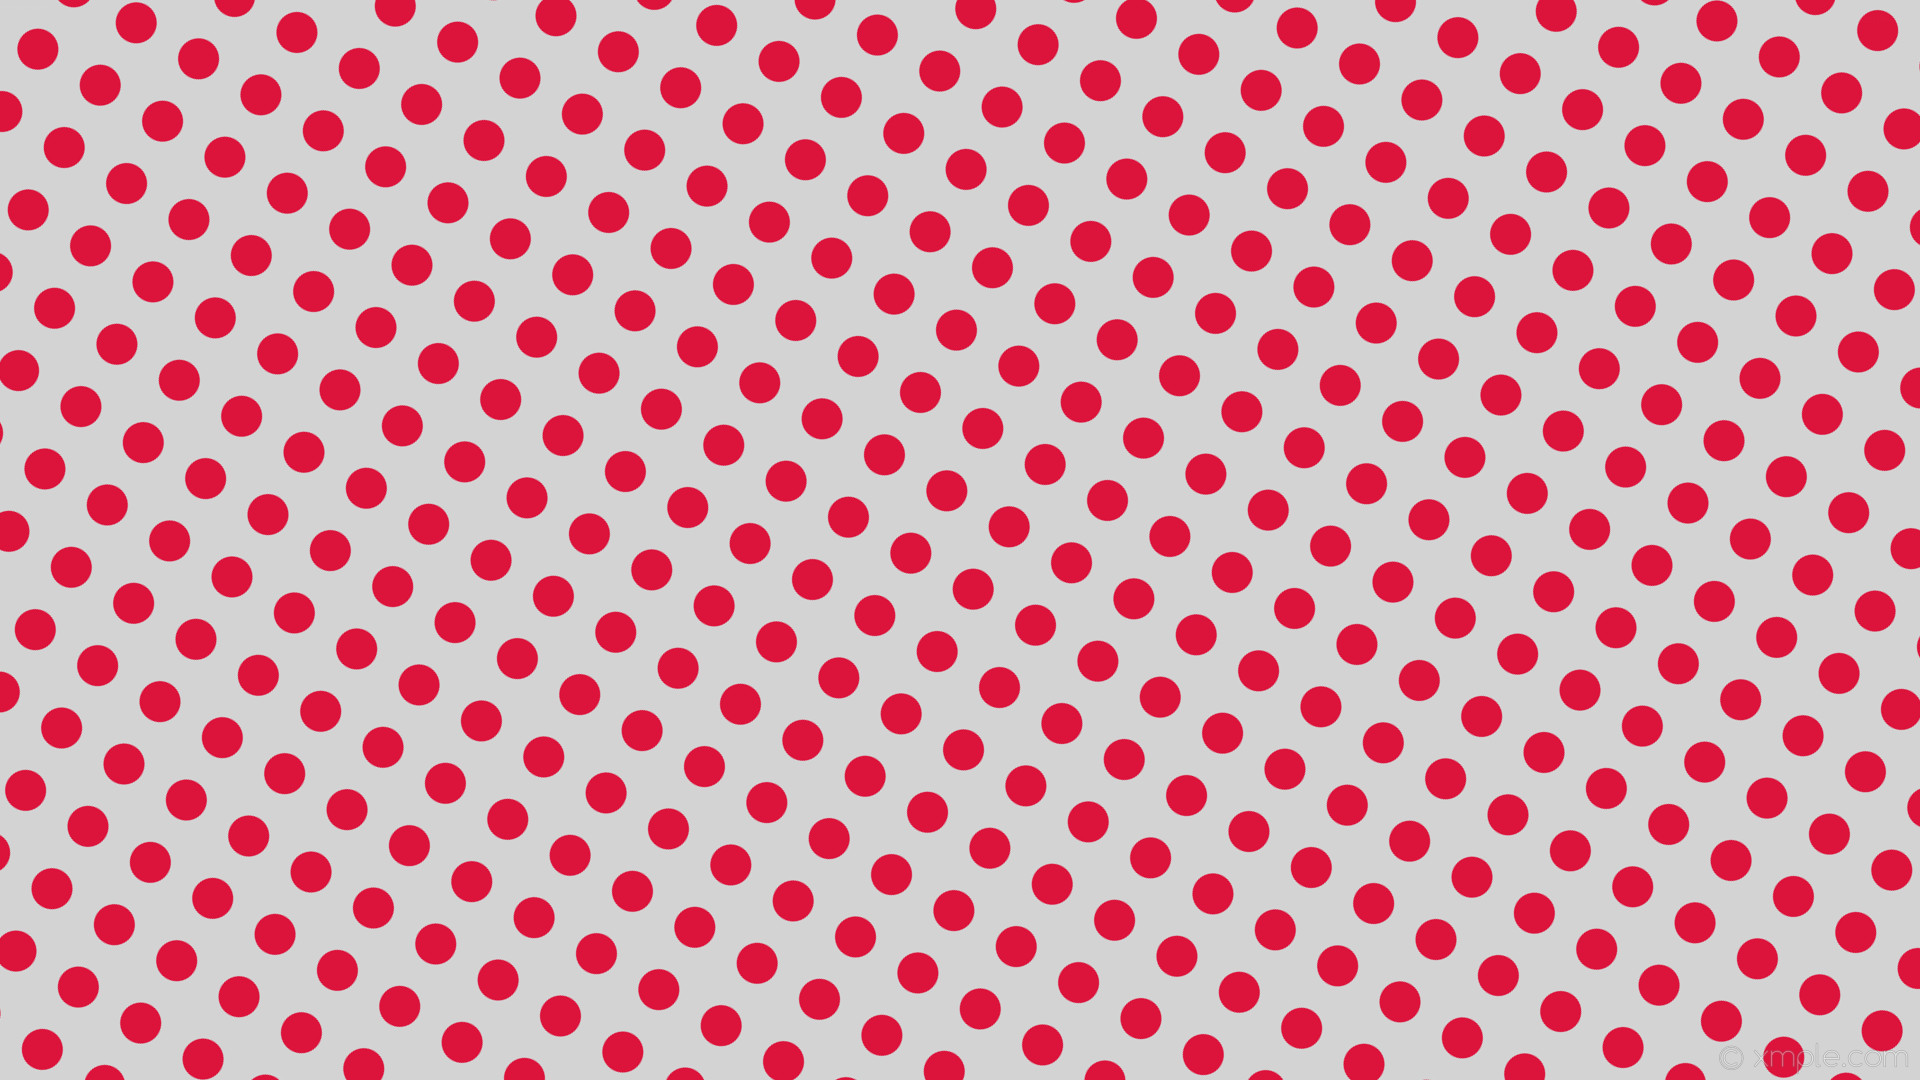 1920x1080 wallpaper grey spots red polka dots light gray crimson #d3d3d3 #dc143c 150Â°  41px